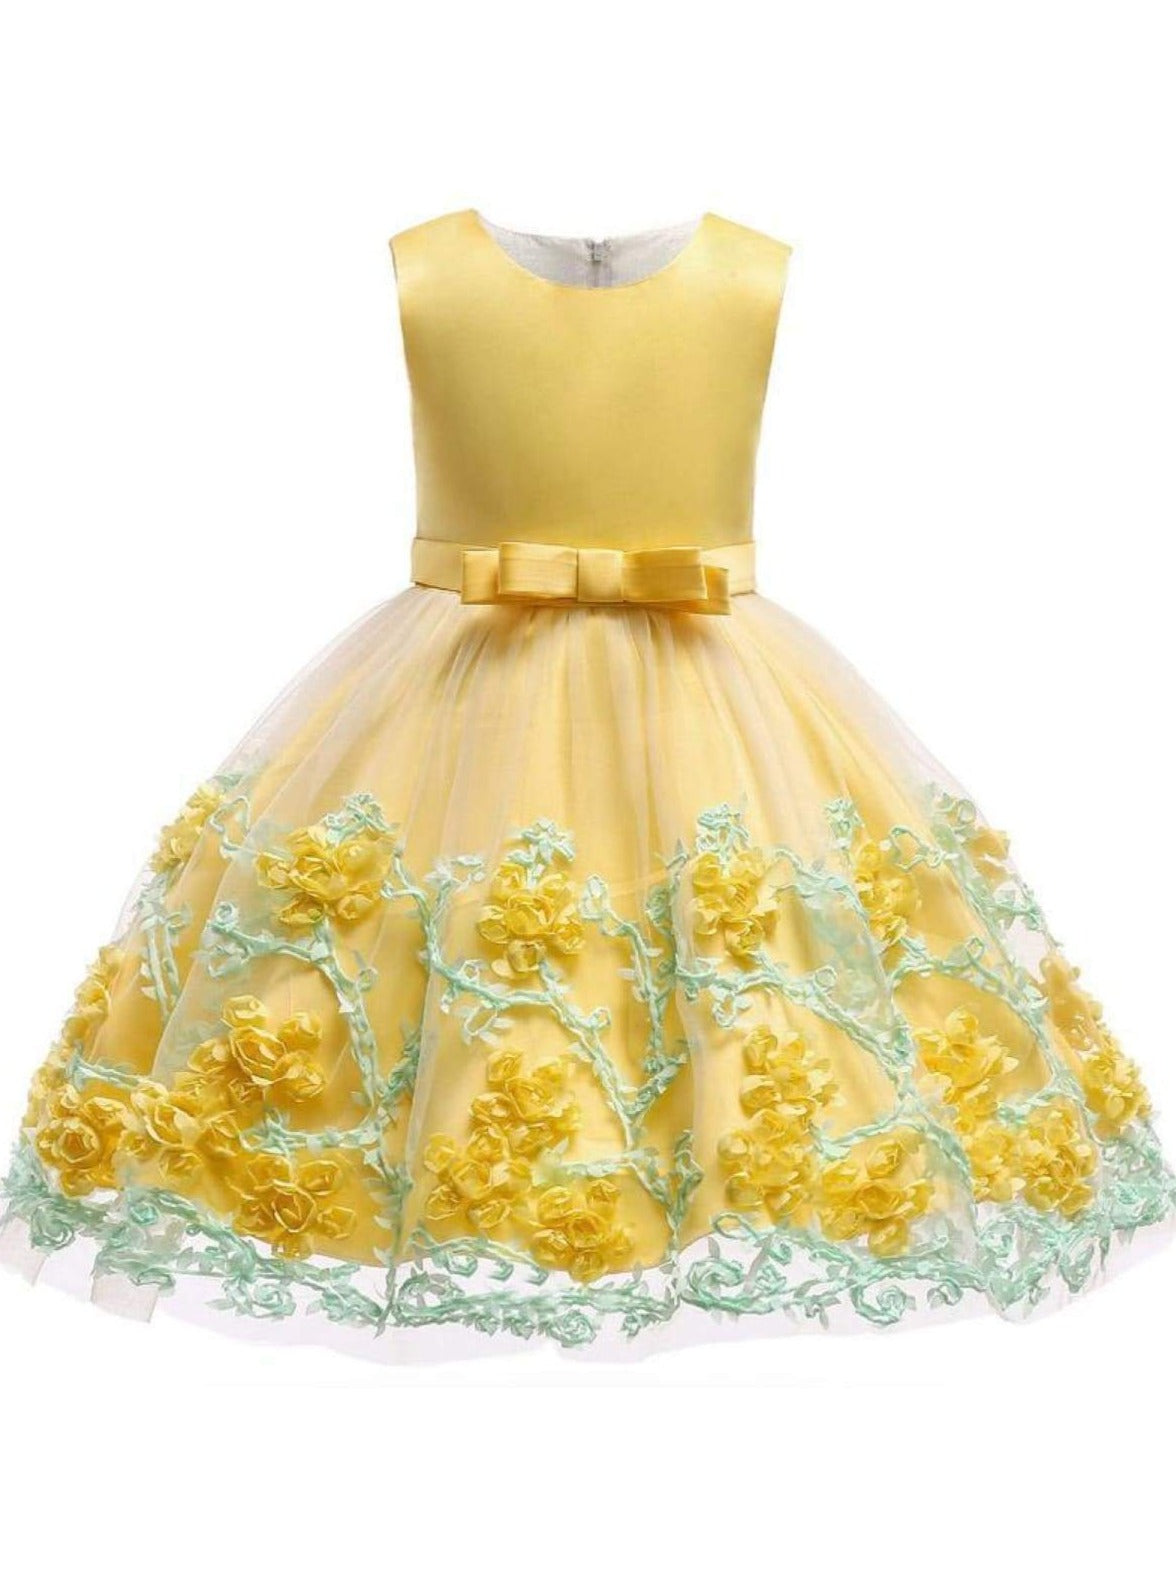 Cute Toddler Dresses | Girls Garden Buttercup Floral Tulle Party Dress